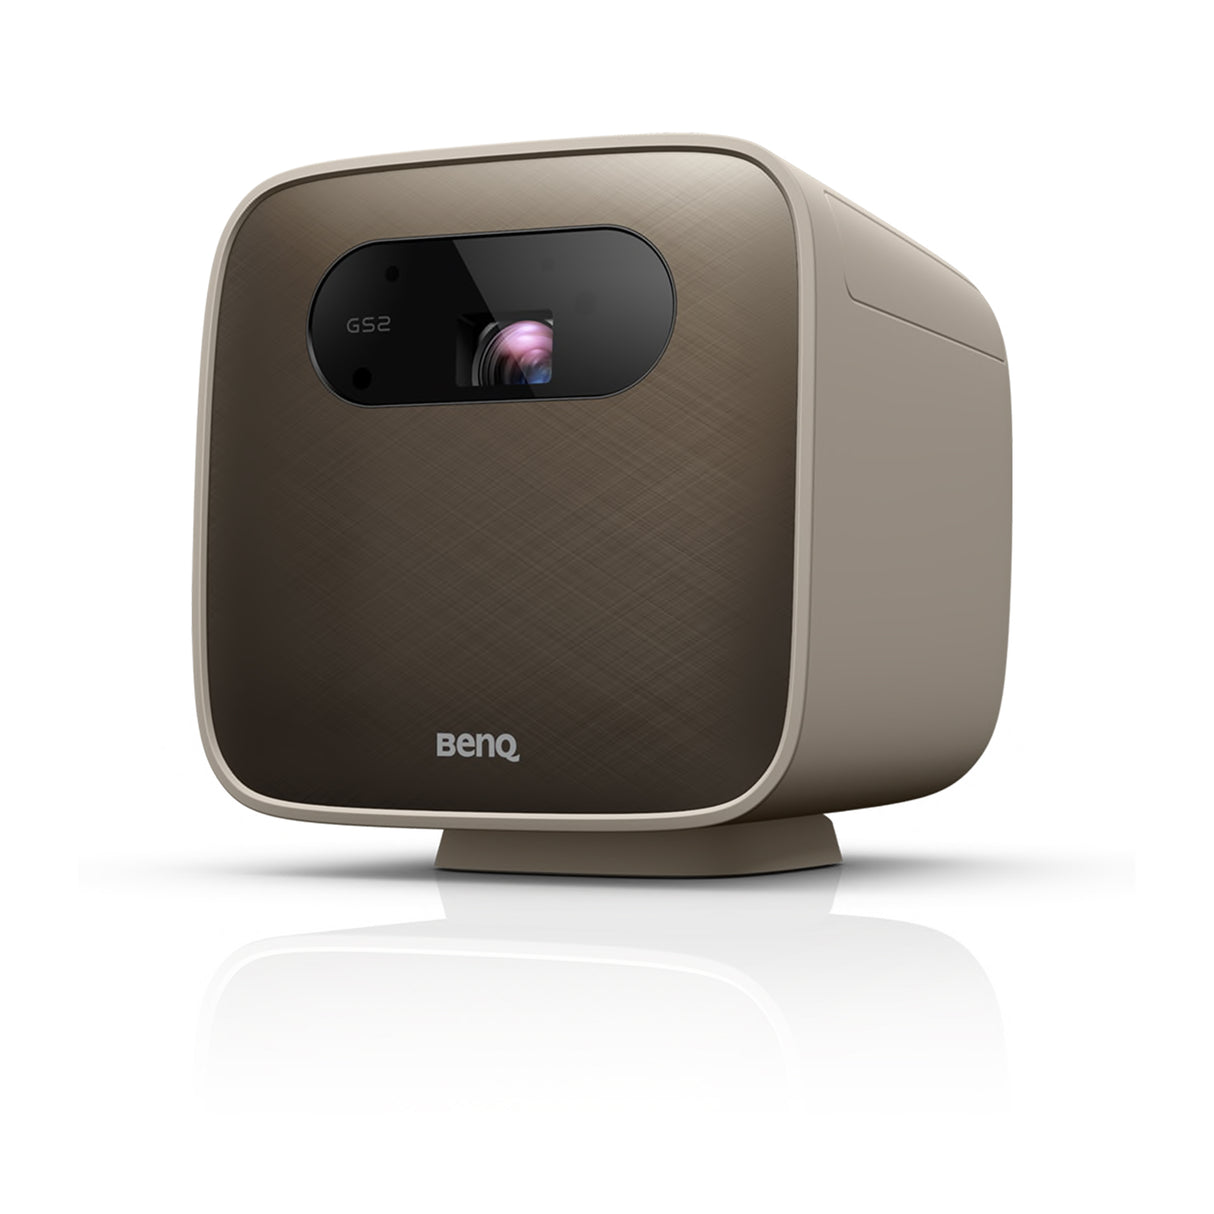 BenQ GS2 HD Portable DLP Projector